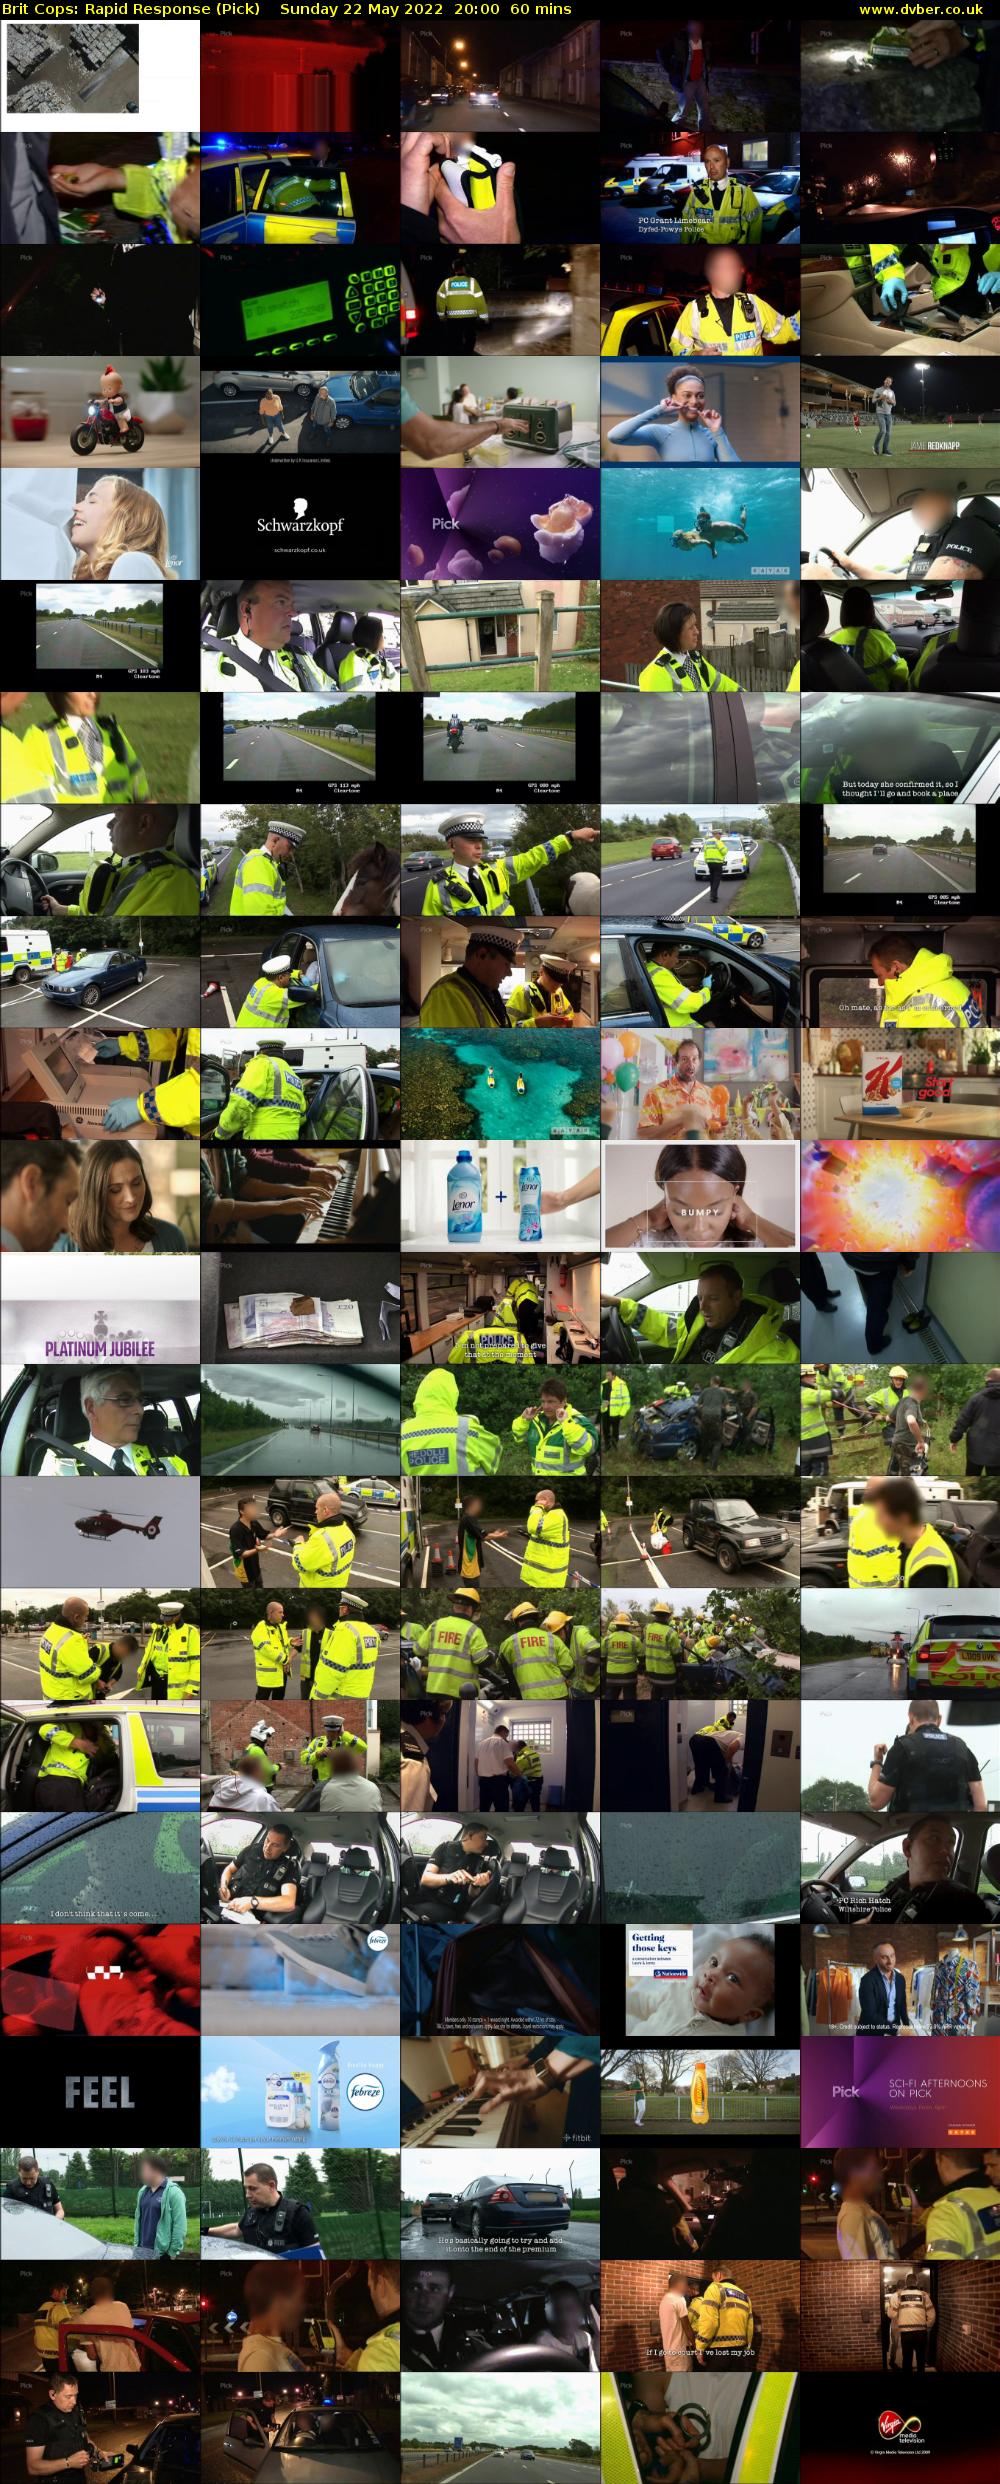 Brit Cops: Rapid Response (Pick) Sunday 22 May 2022 20:00 - 21:00